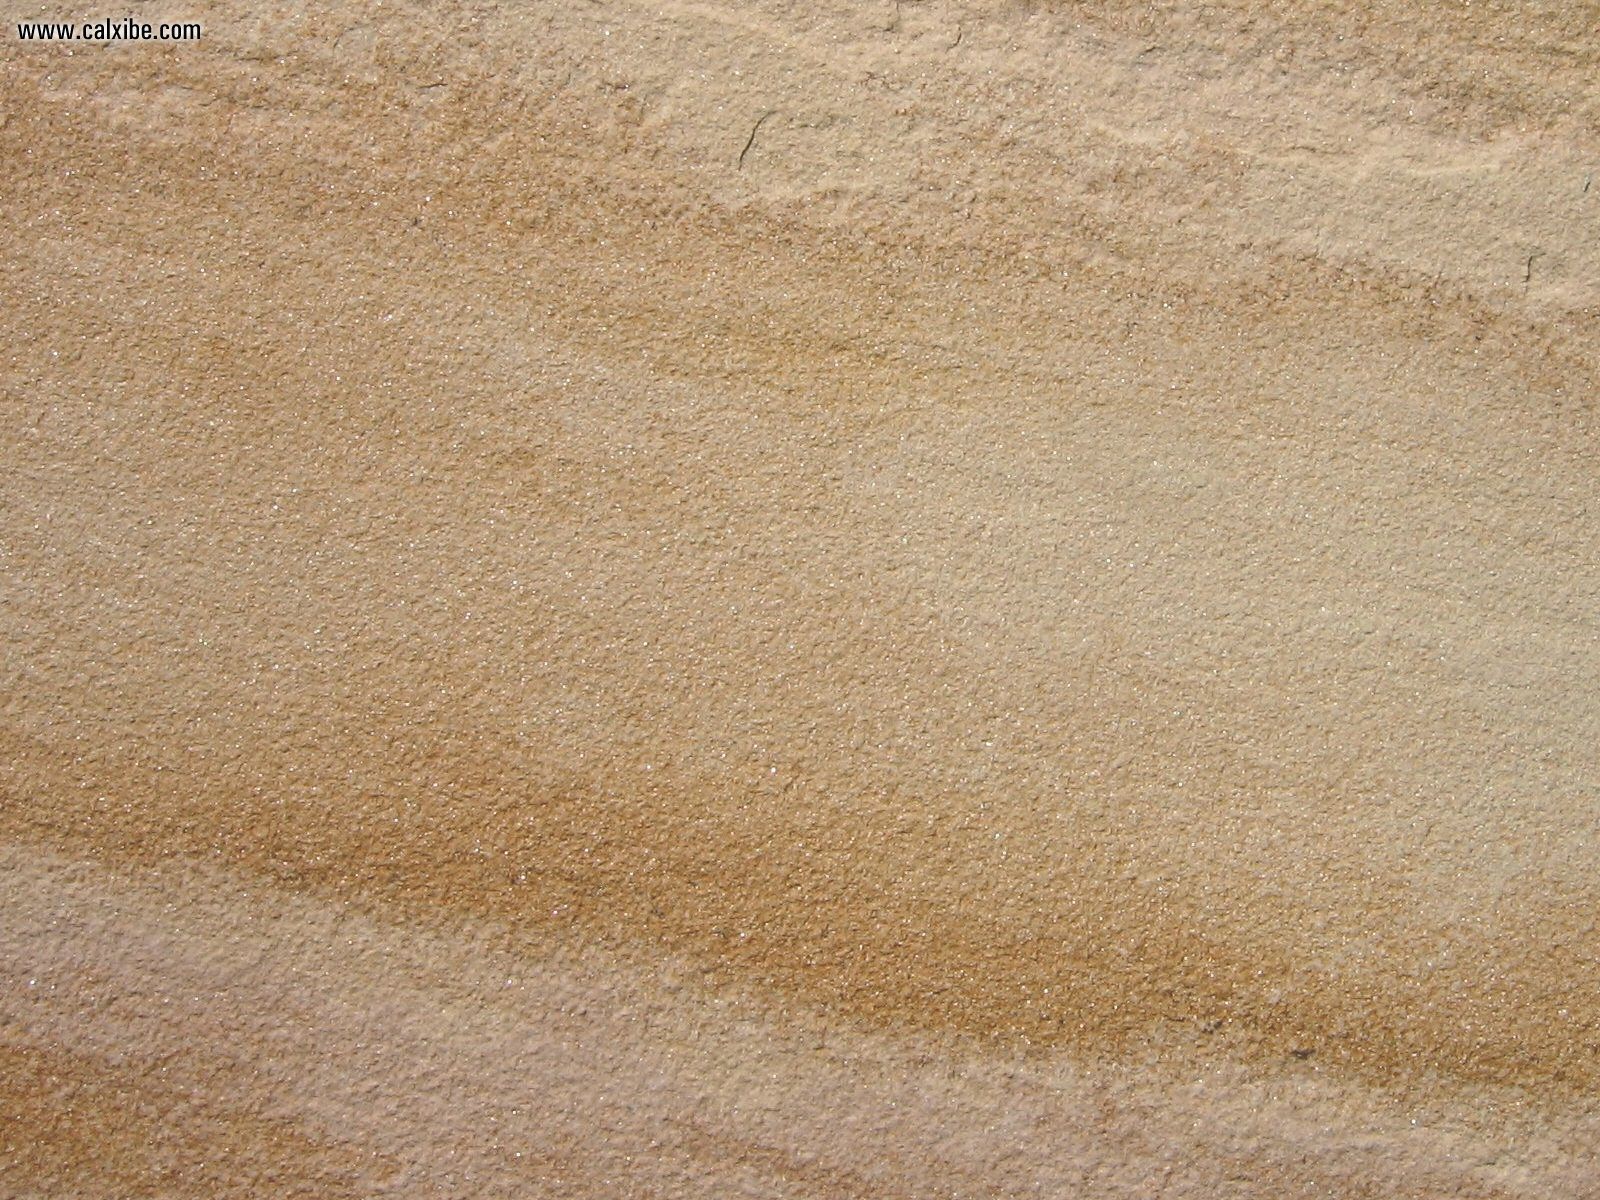 Sandstone Wallpaper On